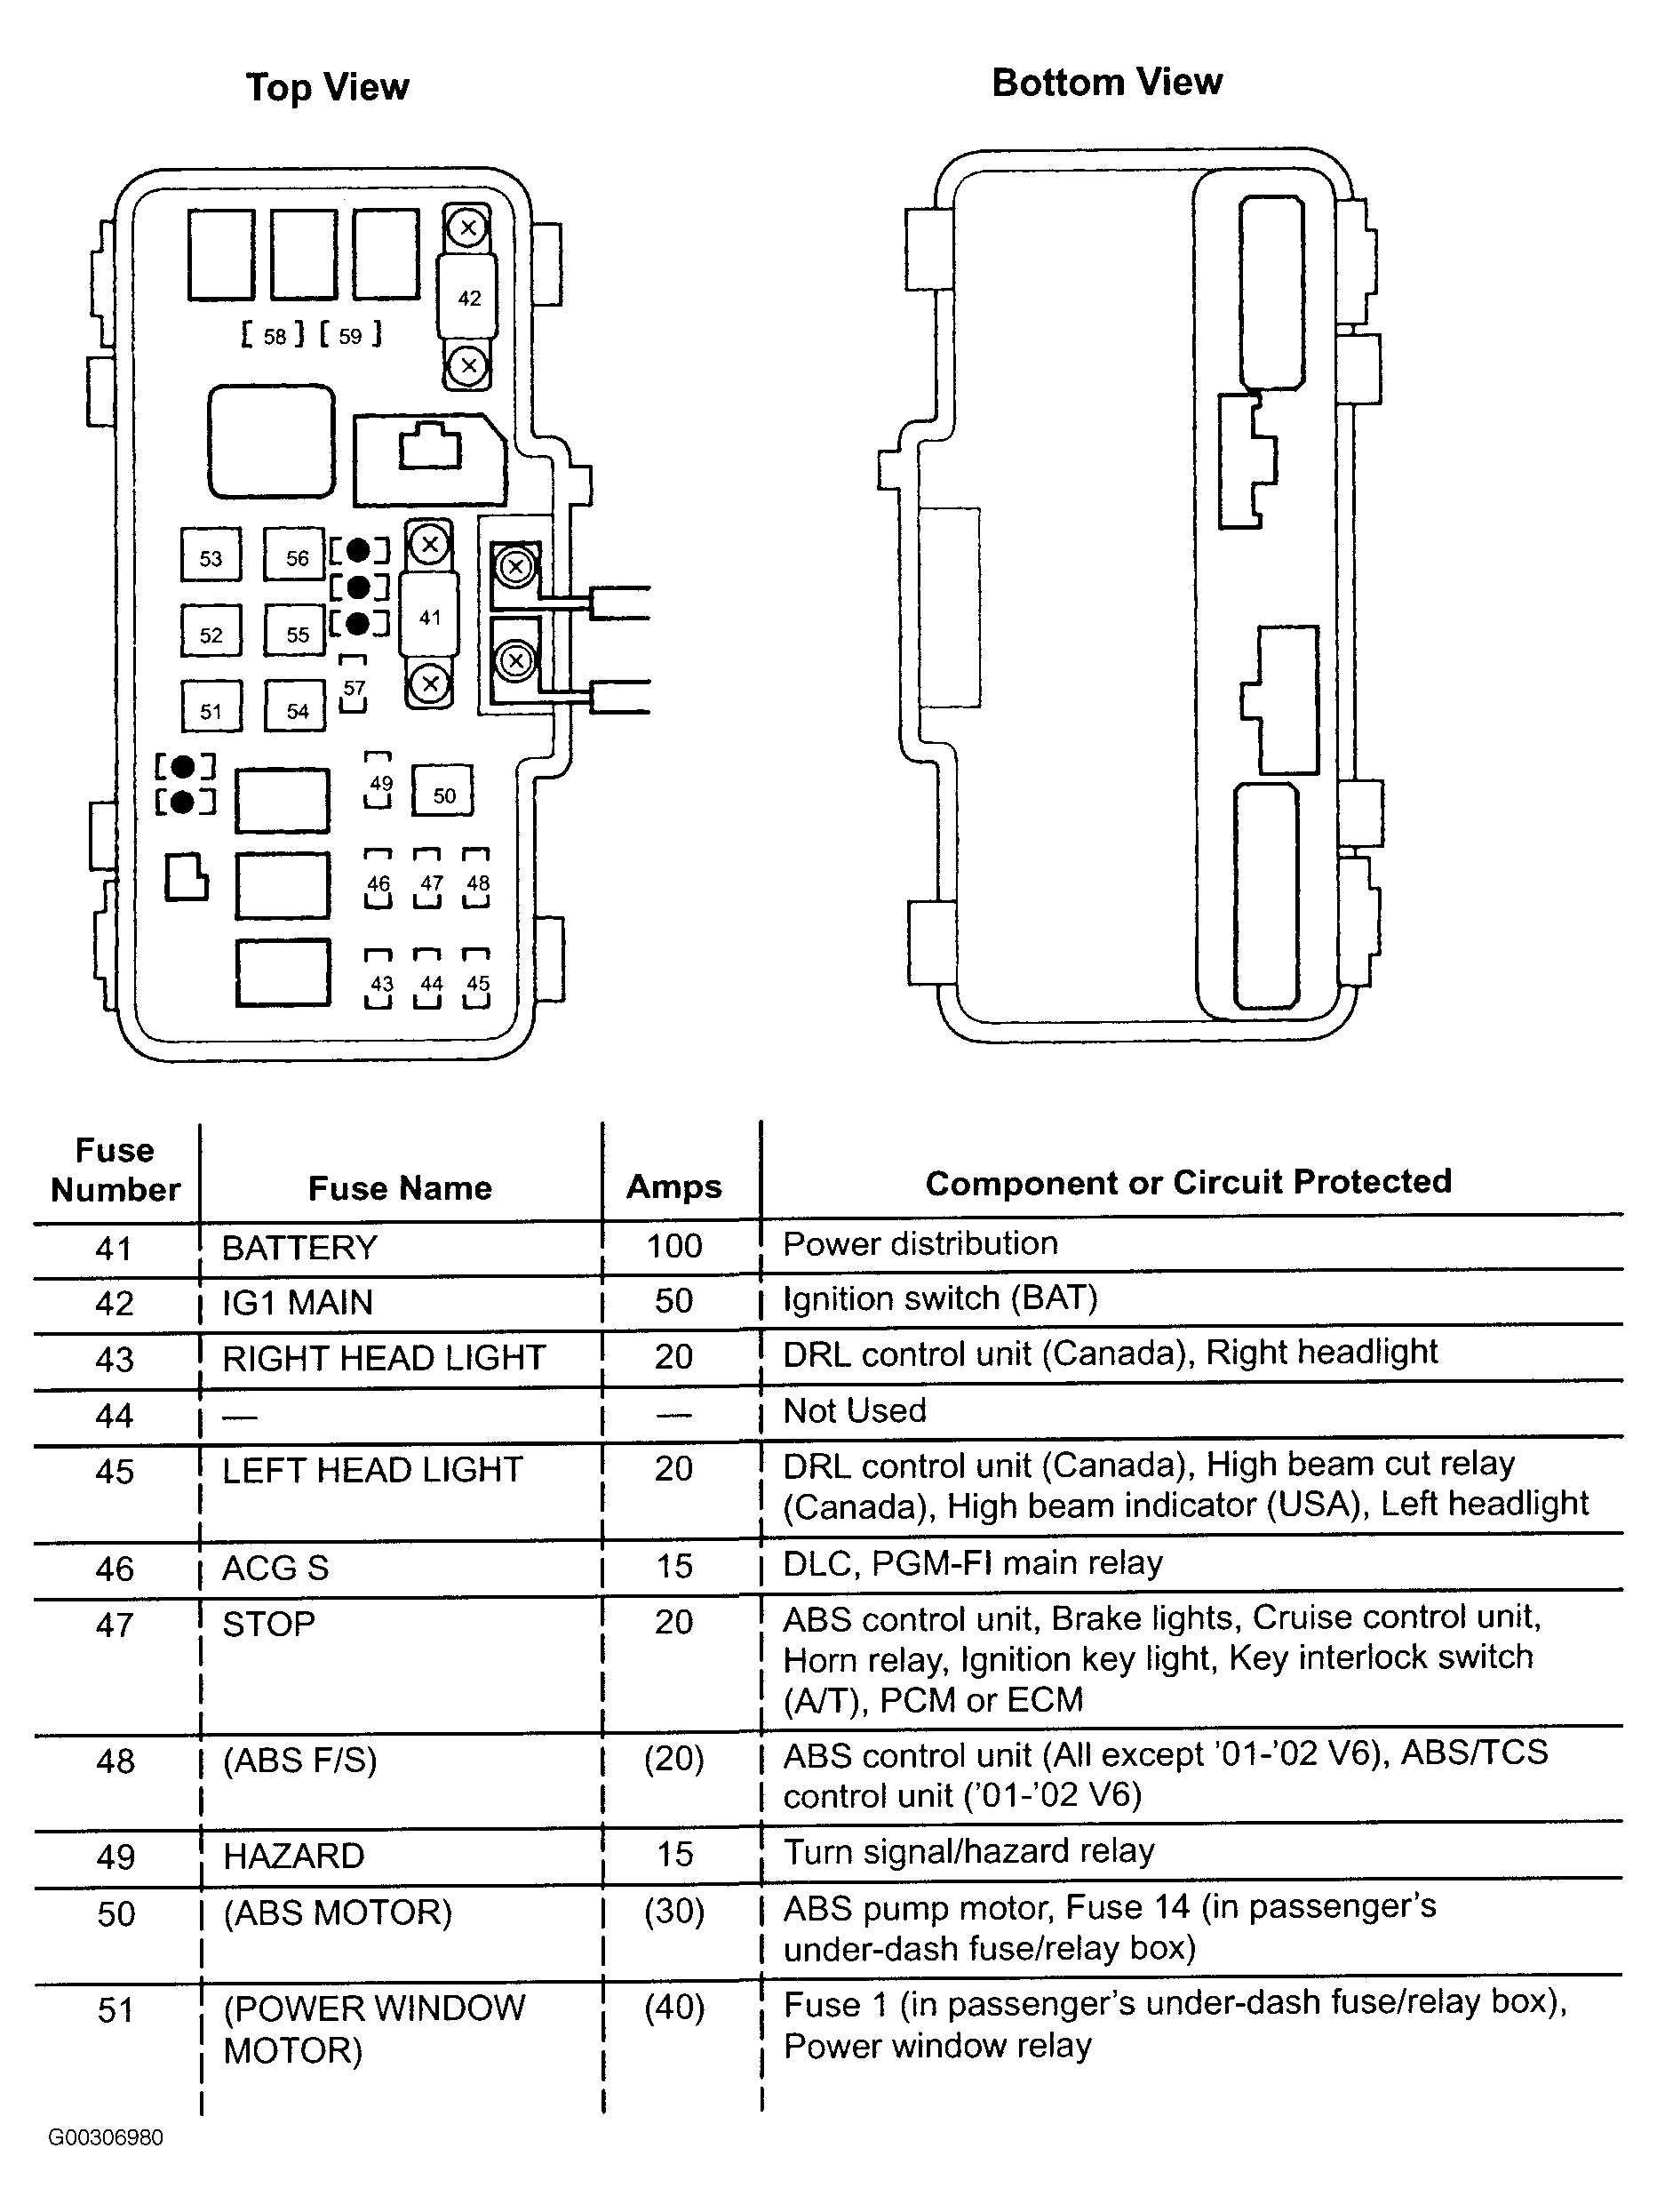 1996 Honda Civic Ex Engine Diagram 88 Honda Dx Fuse Box Wiring Diagram Of 1996 Honda Civic Ex Engine Diagram